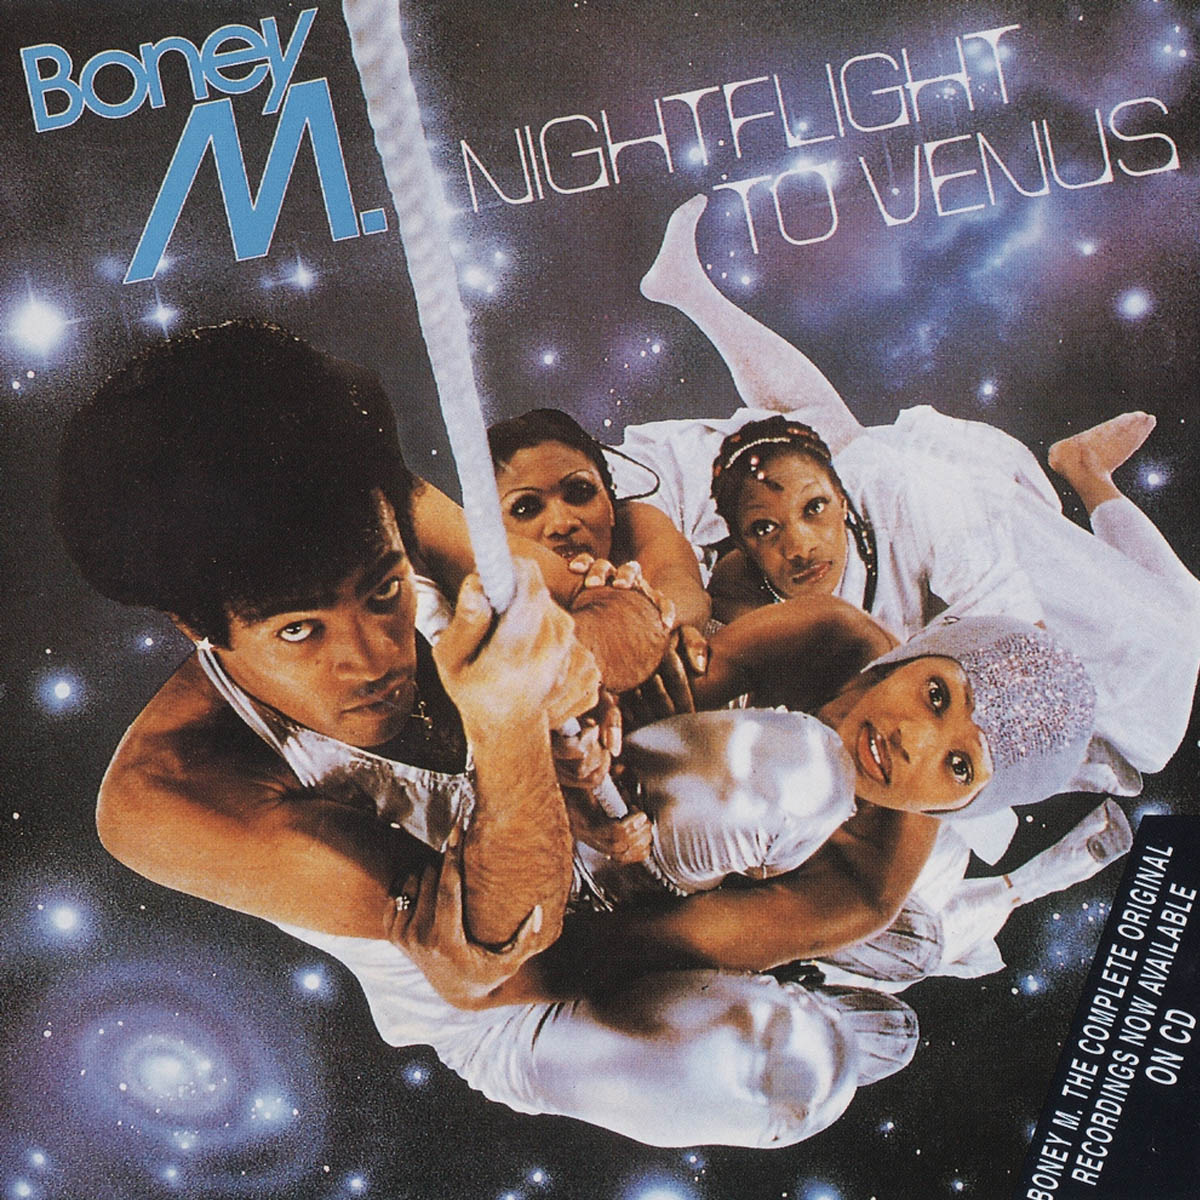 Portada del álbum "Nightflight to Venus" (1078) de Boney M.